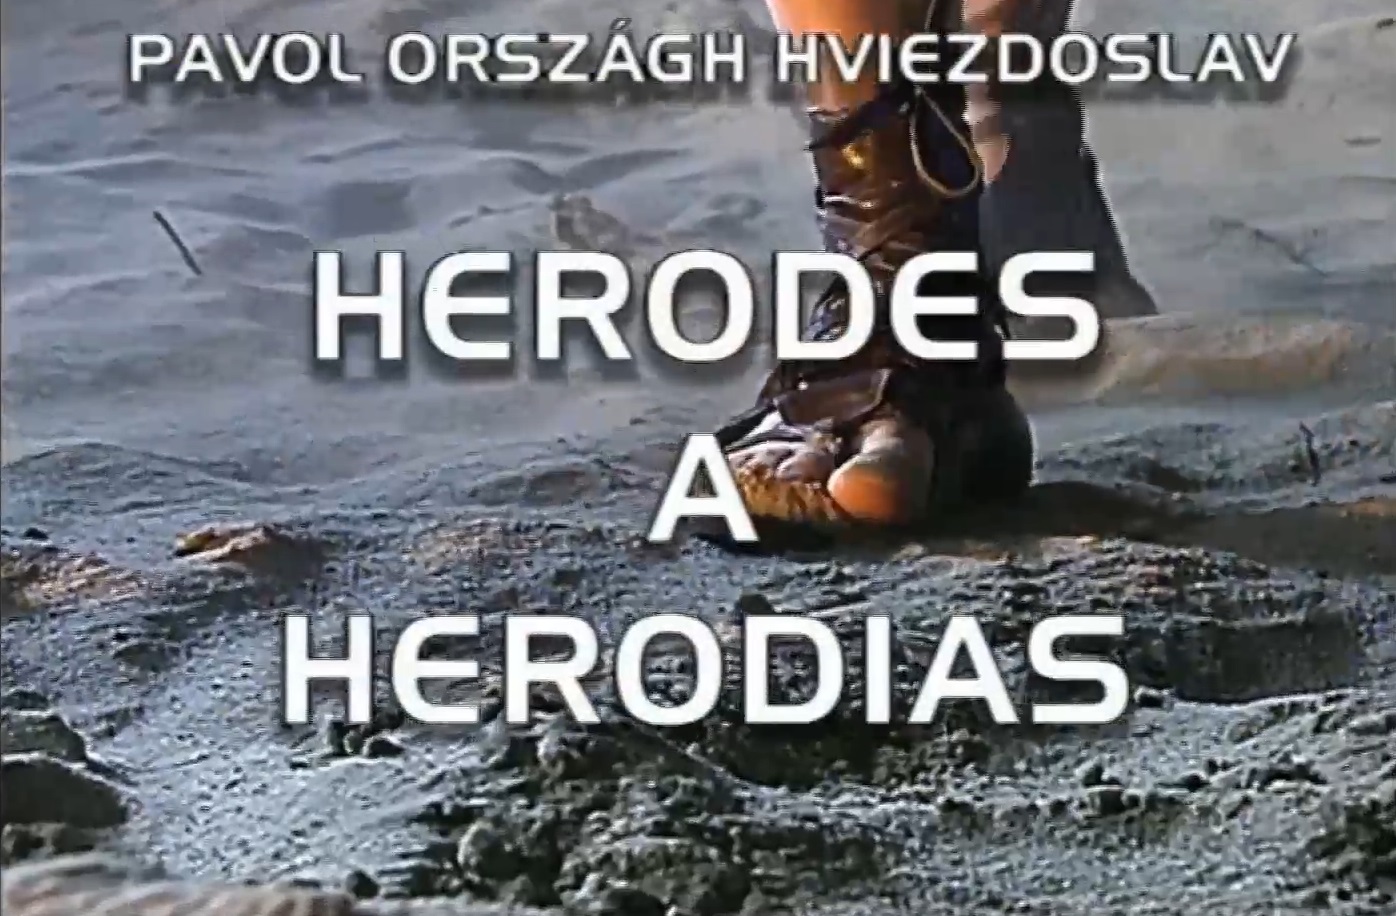 Stiahni si Filmy CZ/SK dabing Herodes a Herodias (1996)(SK)[TvRip]